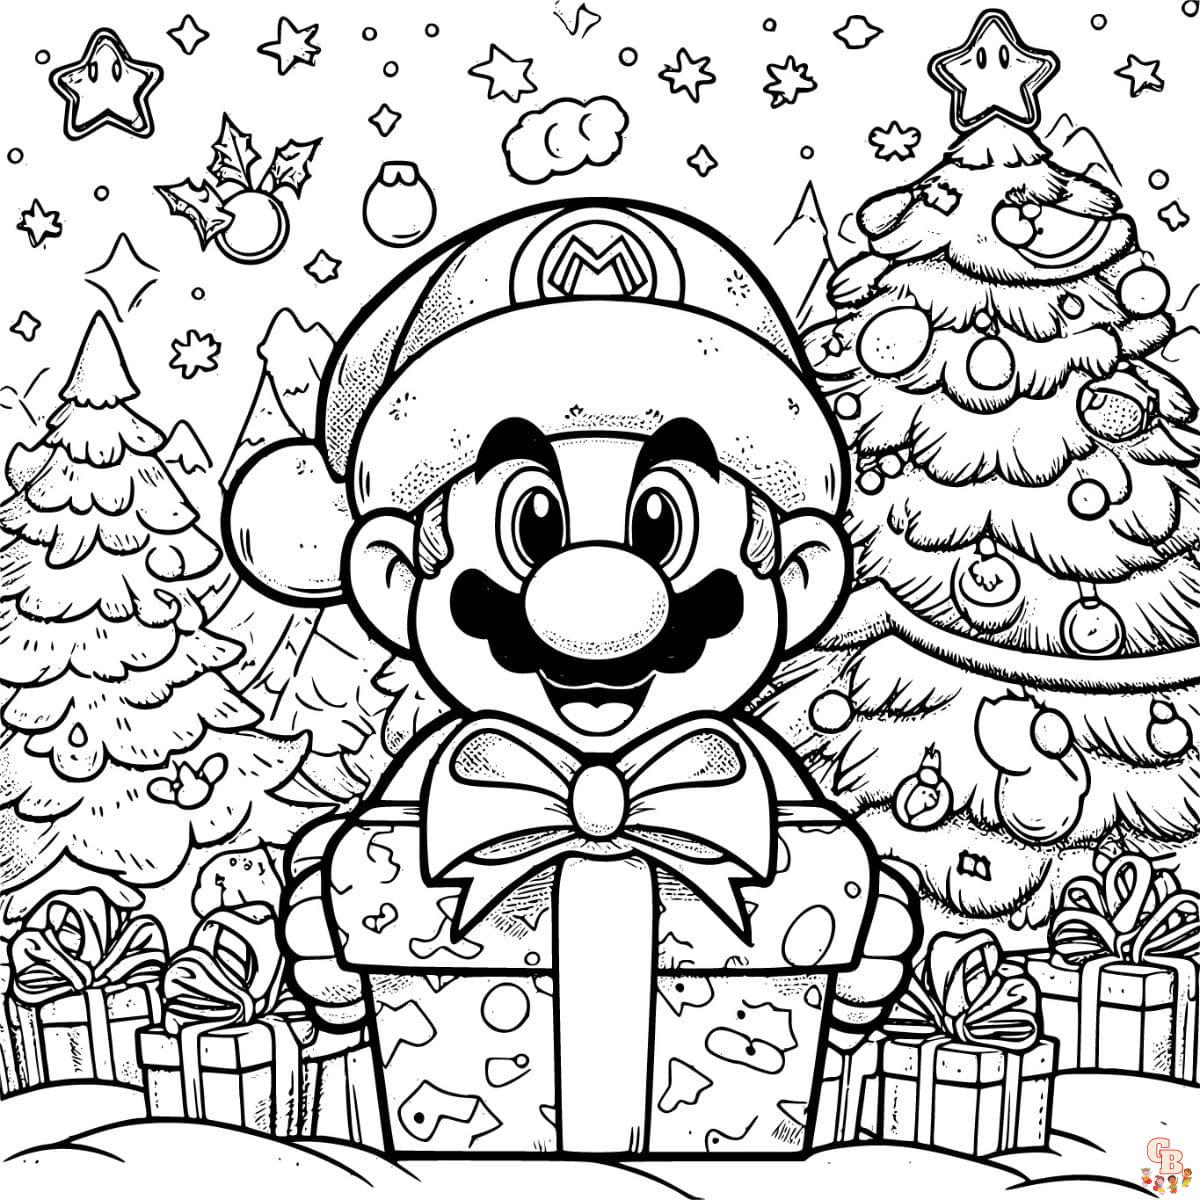 Mario on Christmas